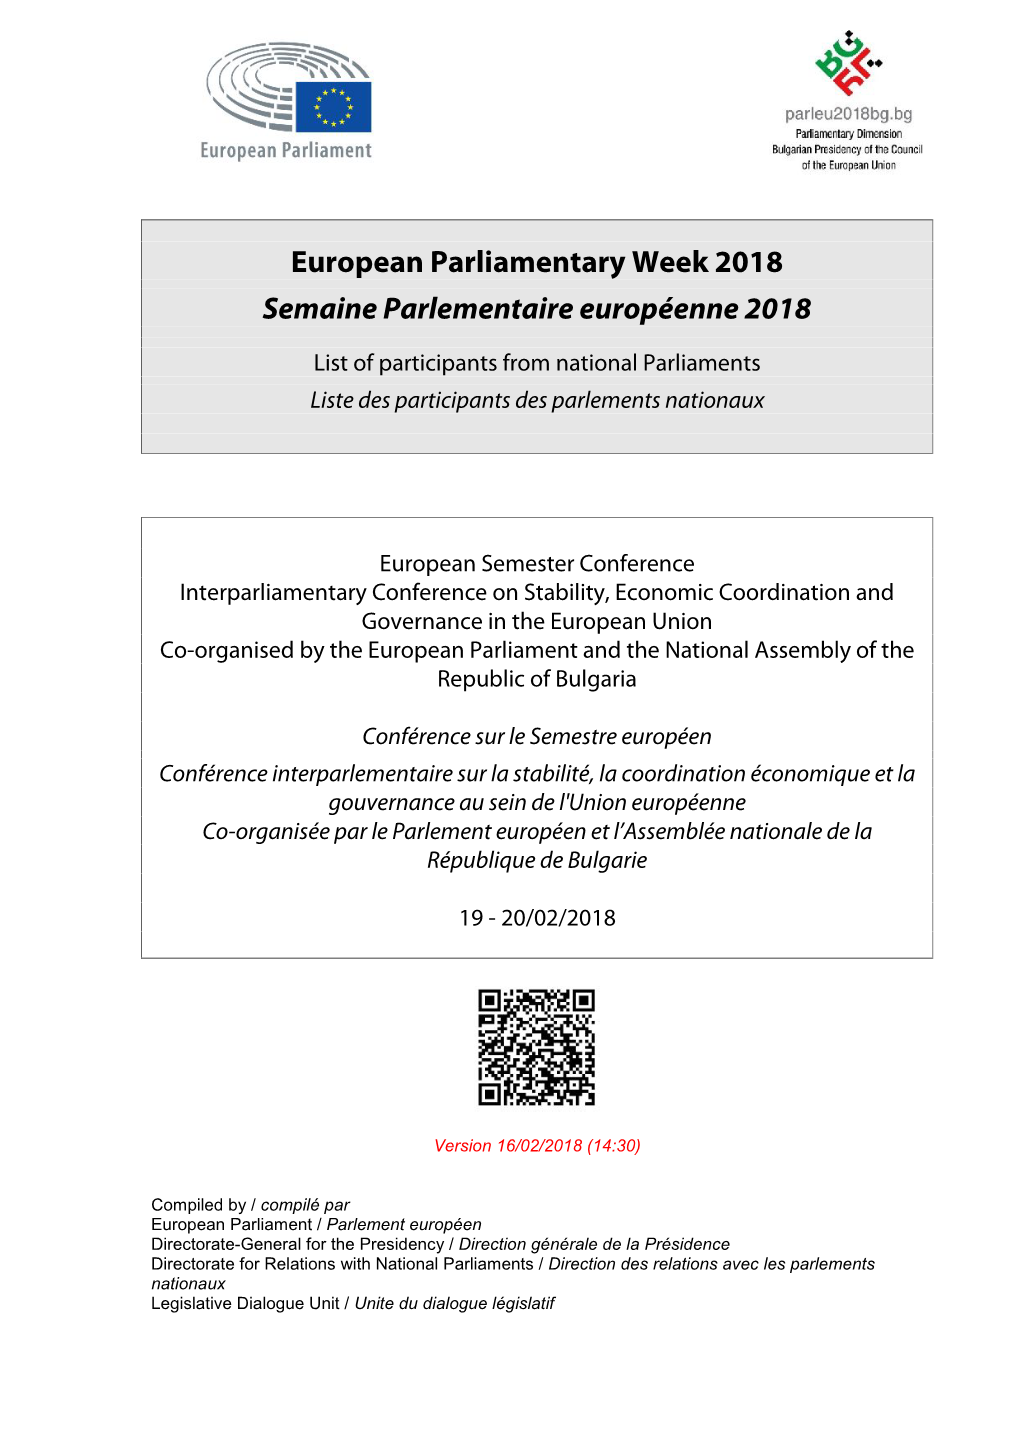 European Parliamentary Week 2018 Semaine Parlementaire Européenne 2018